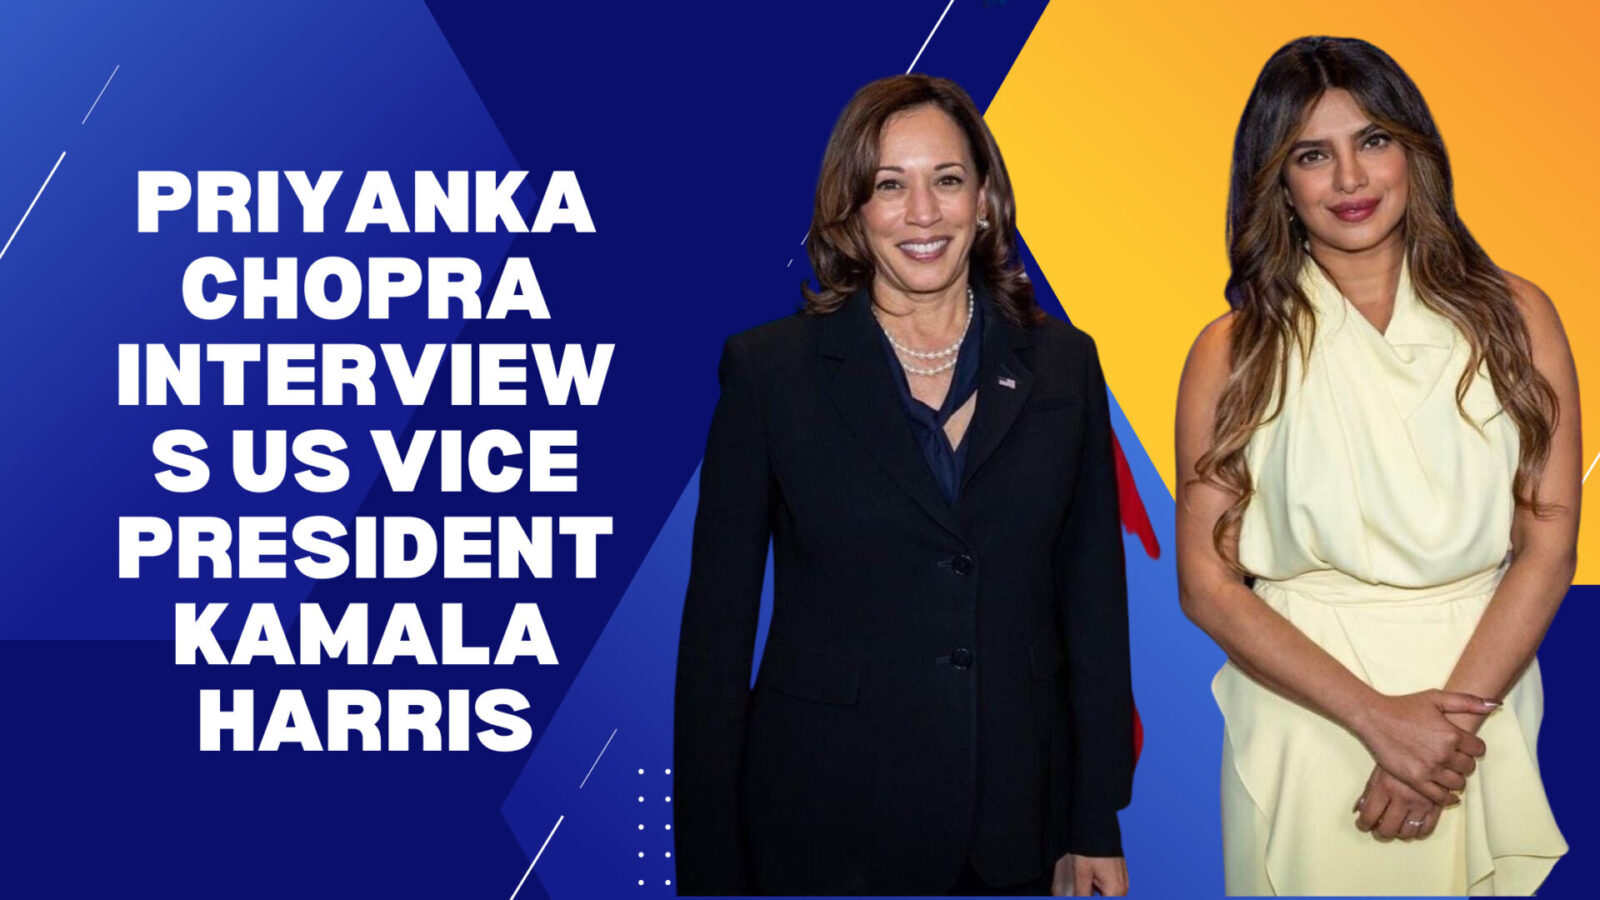 Priyanka Chopra interviews US Vice President Kamala Harris